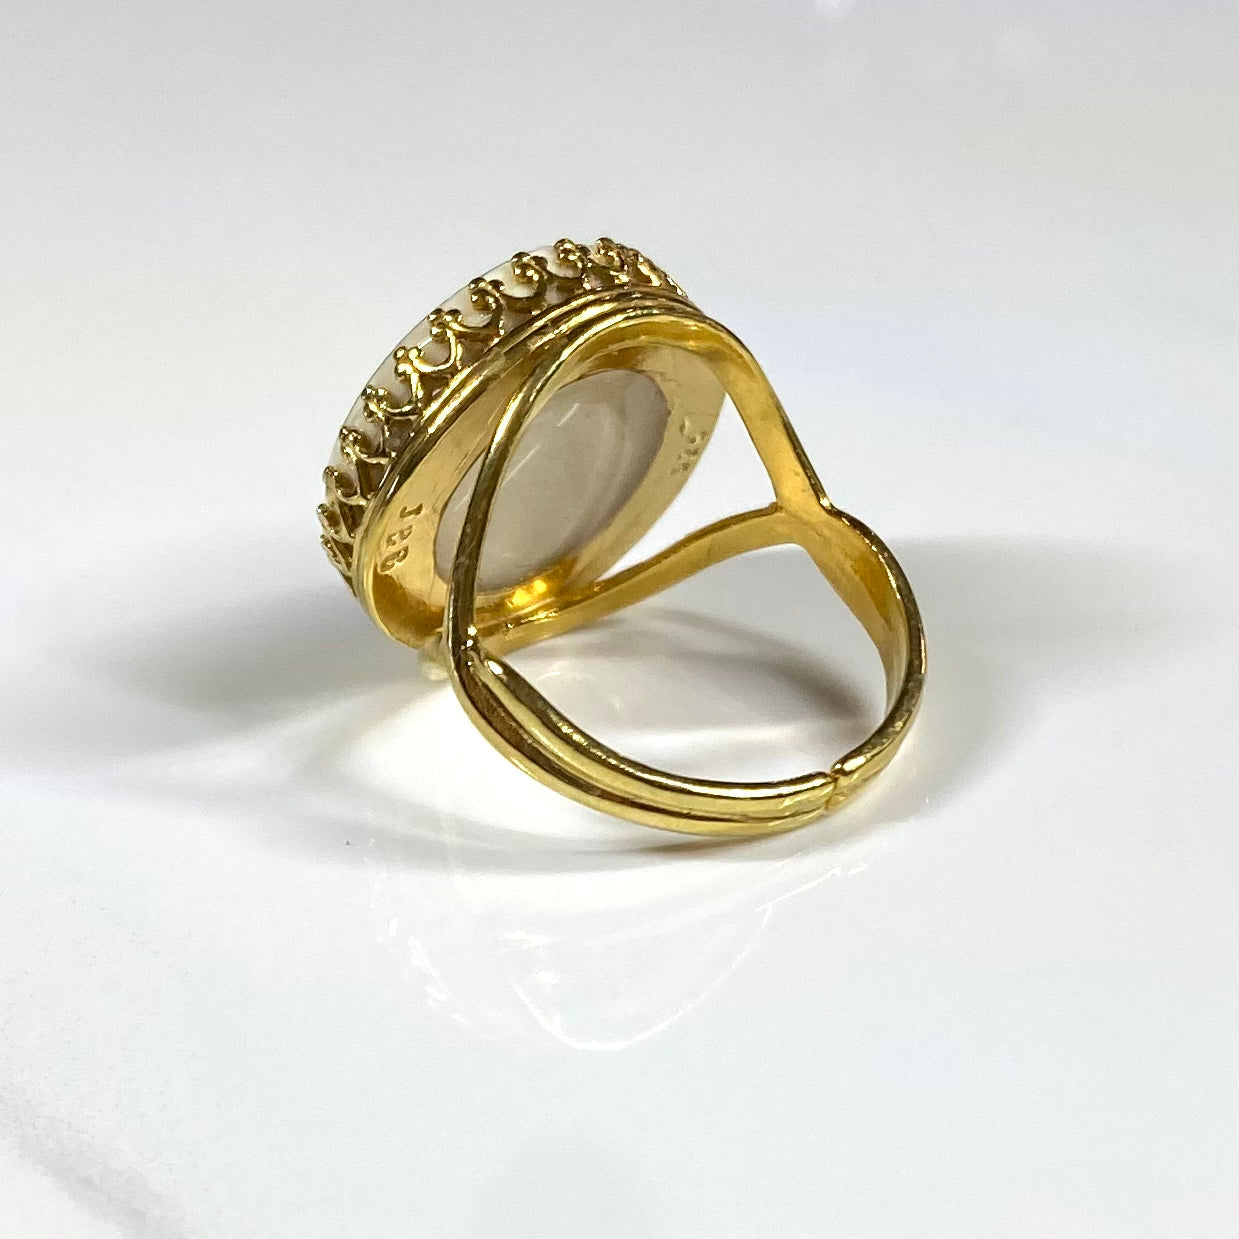 1937 Royal Winton ‘Royalty’ Sterling Silver Ring